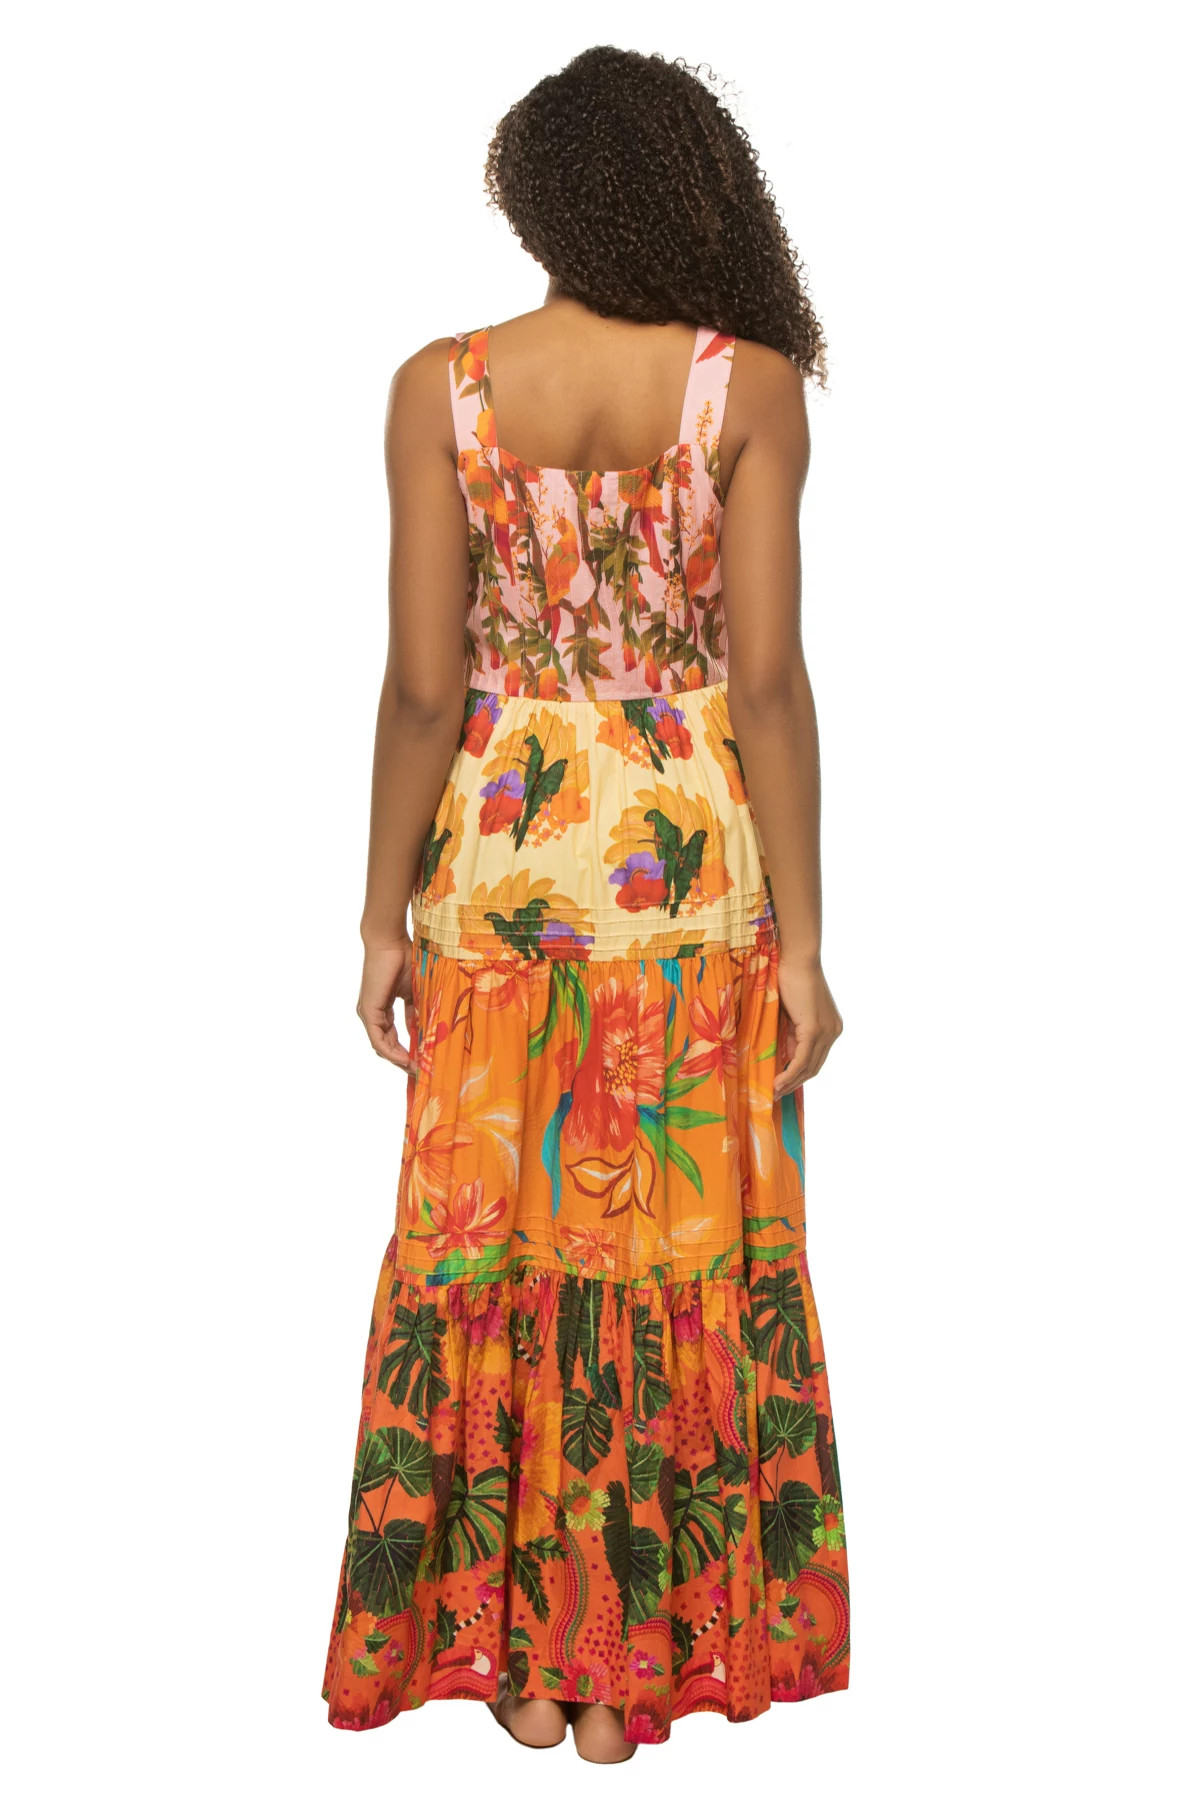 Farm Rio Dark Mixed Prints Tiered Maxi Dress Straps